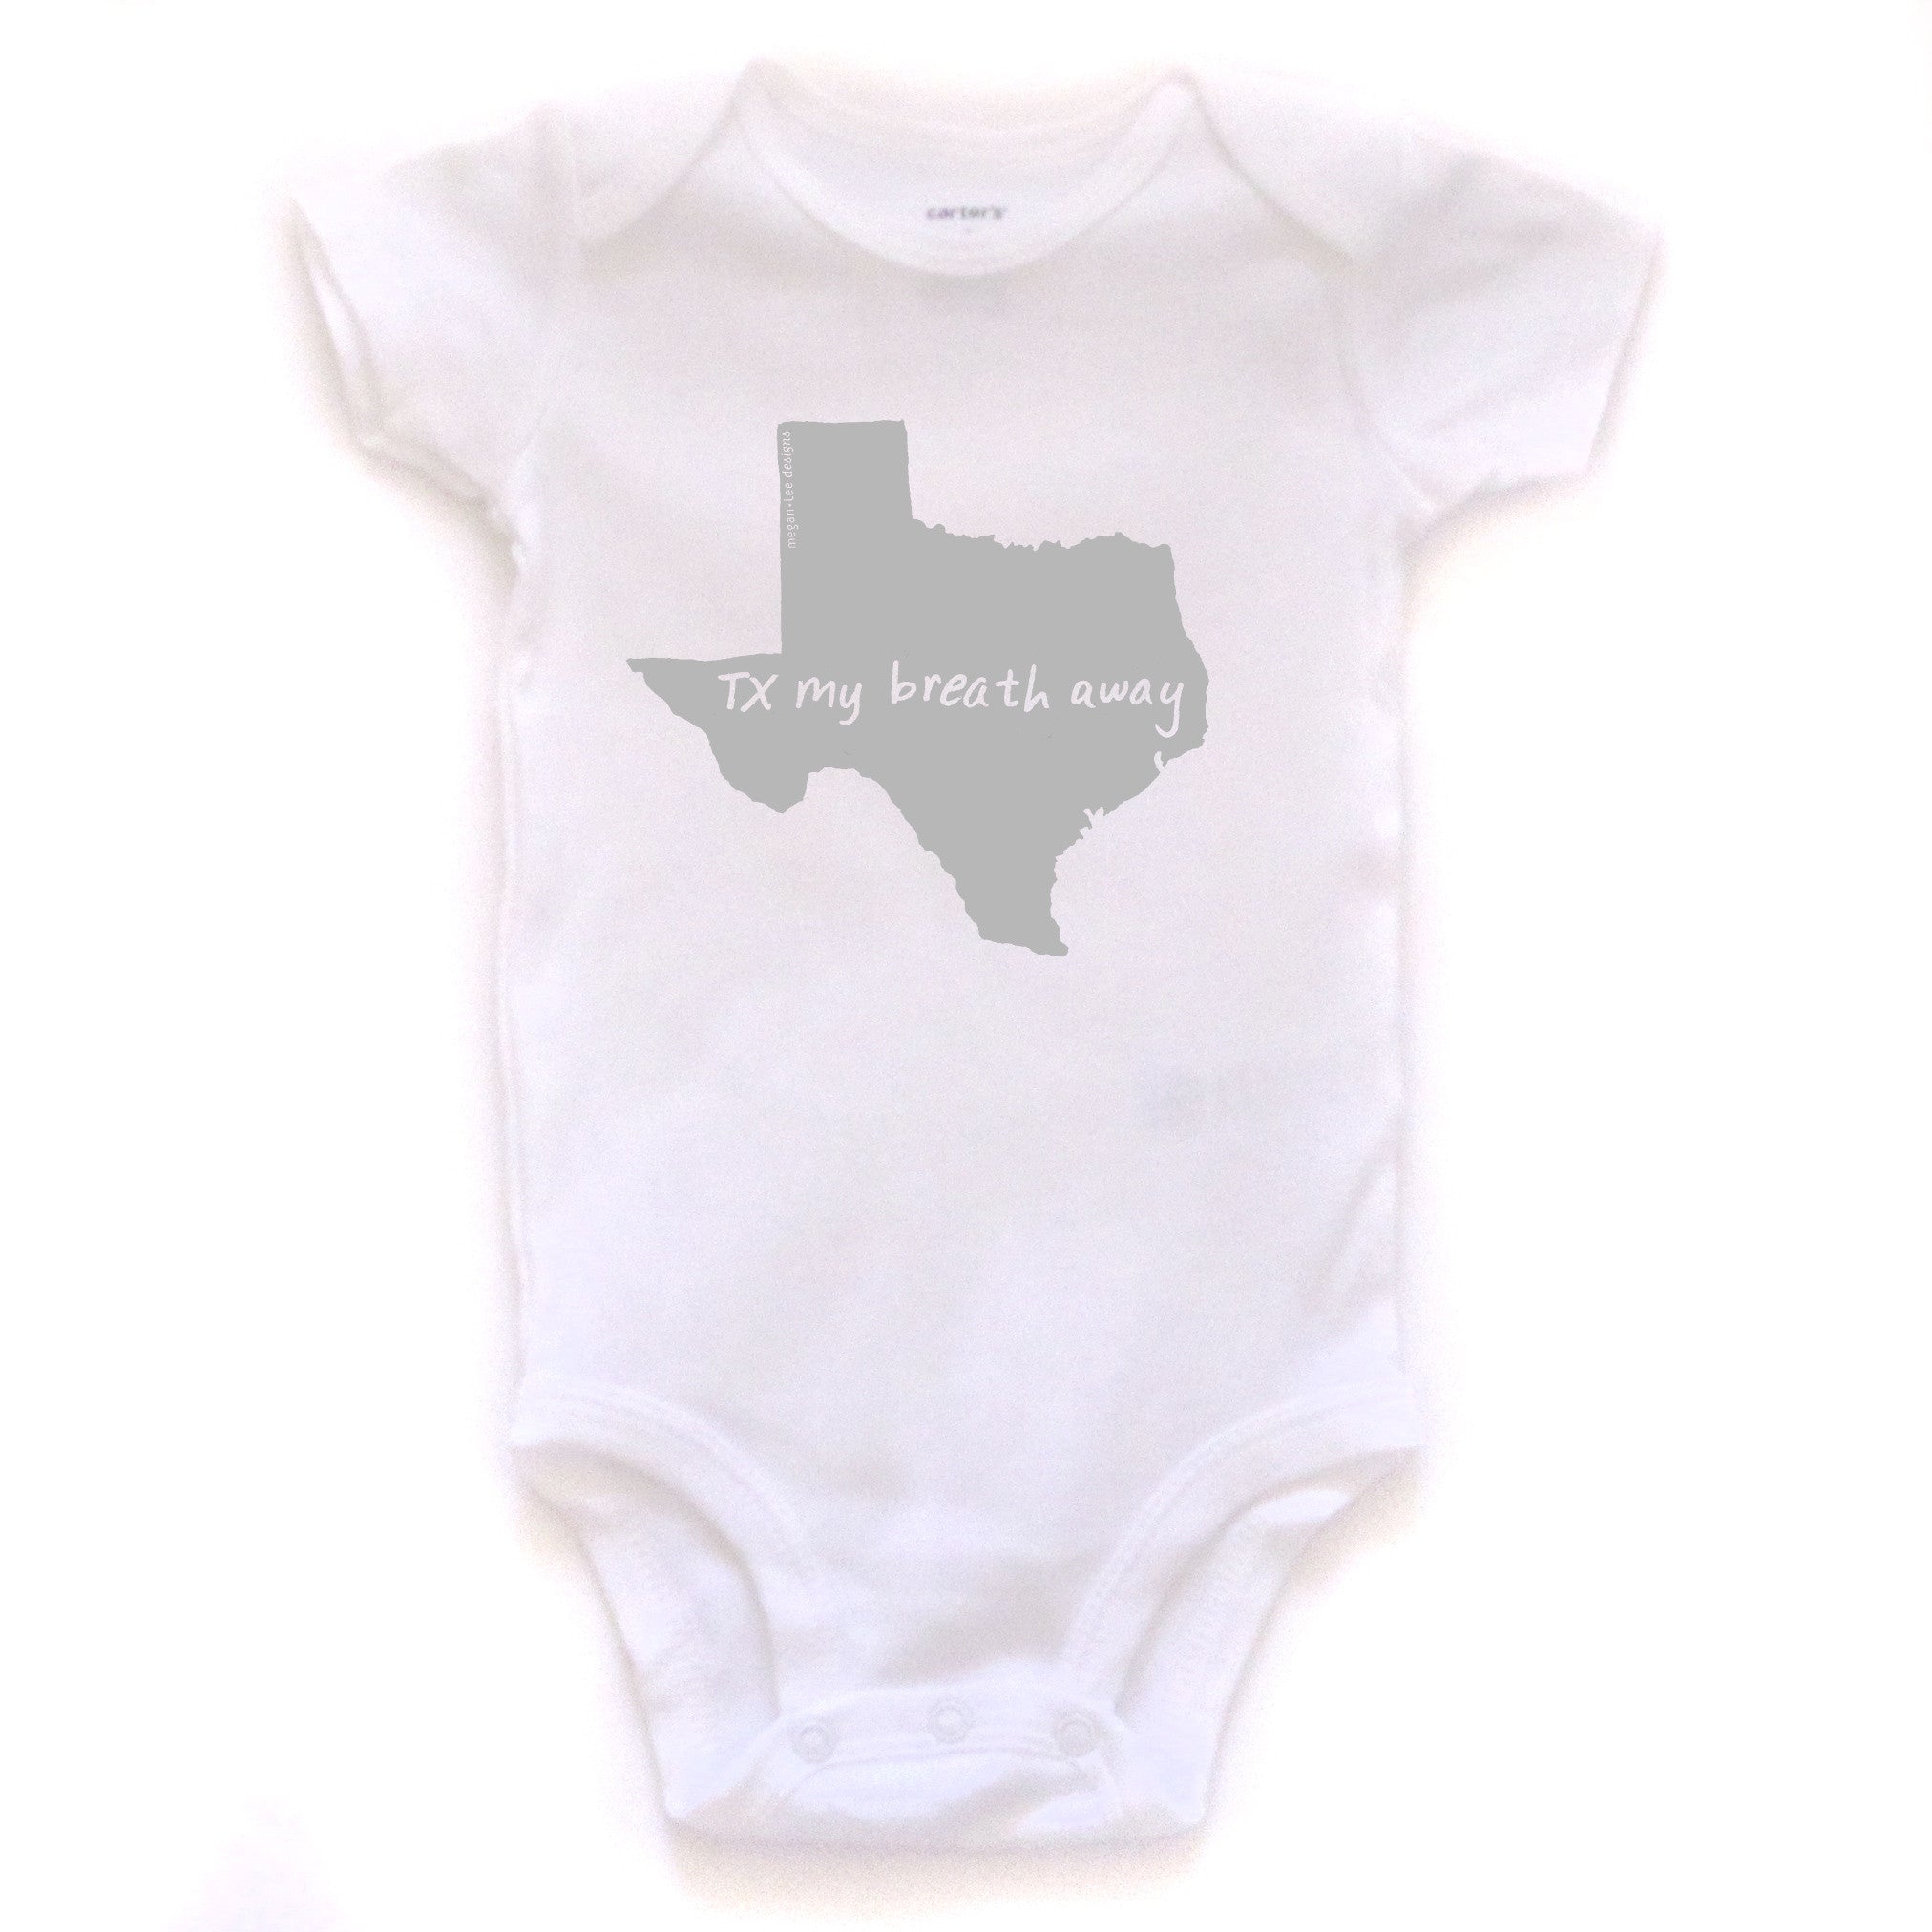 Texas : TX my breath away bodysuit (white), Baby Apparel - Megan Lee Designs